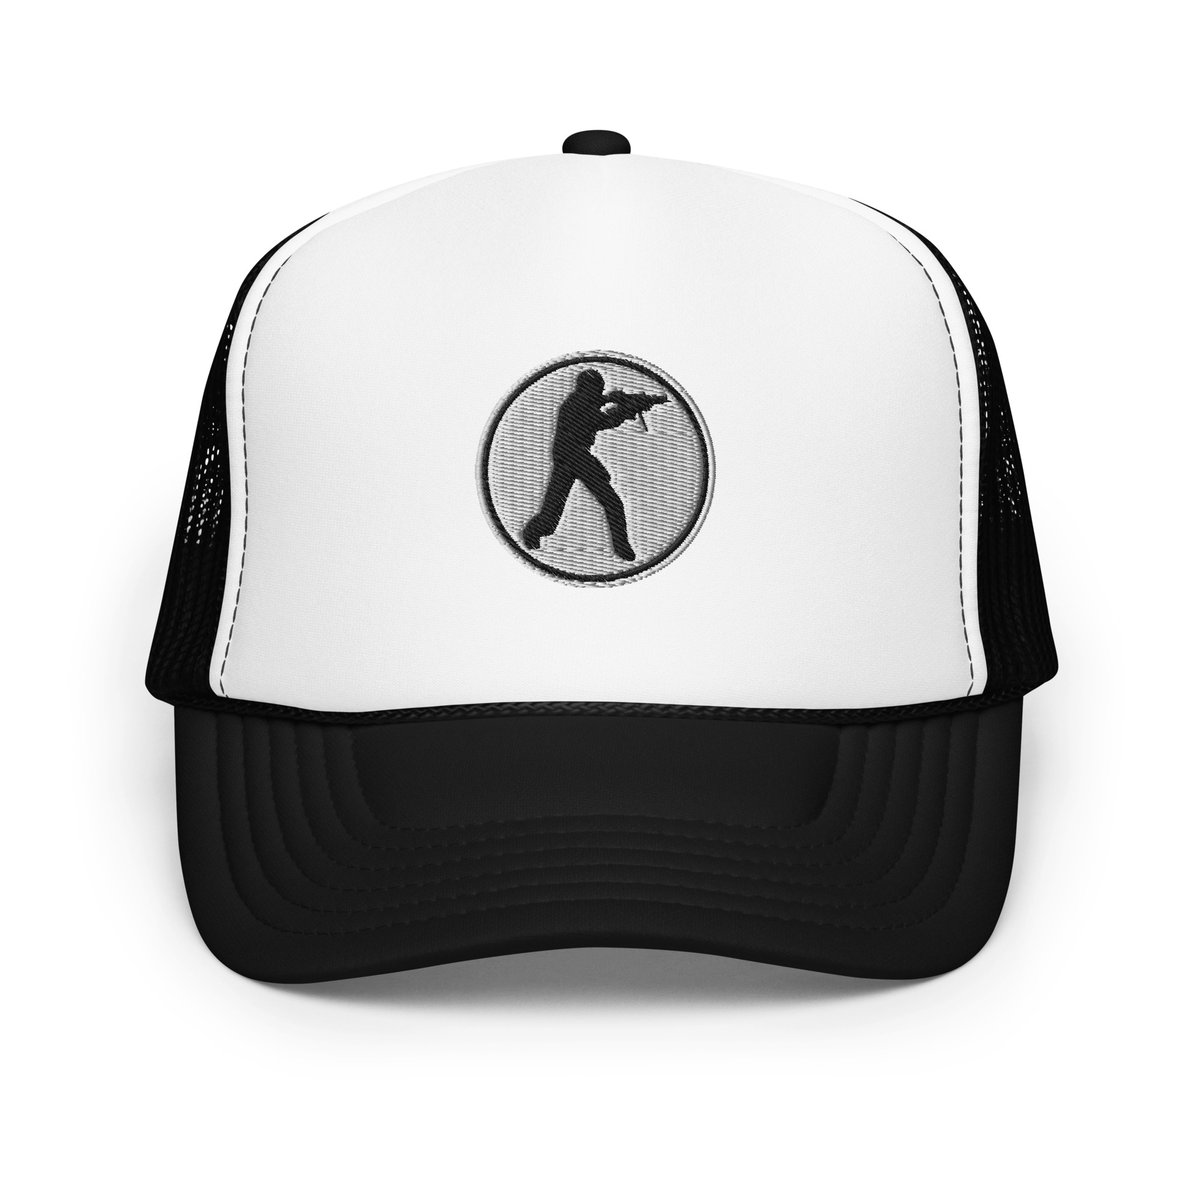 NEW Planet Fitness Black & White Snapback Trucker Hat Cap Thumbs Up